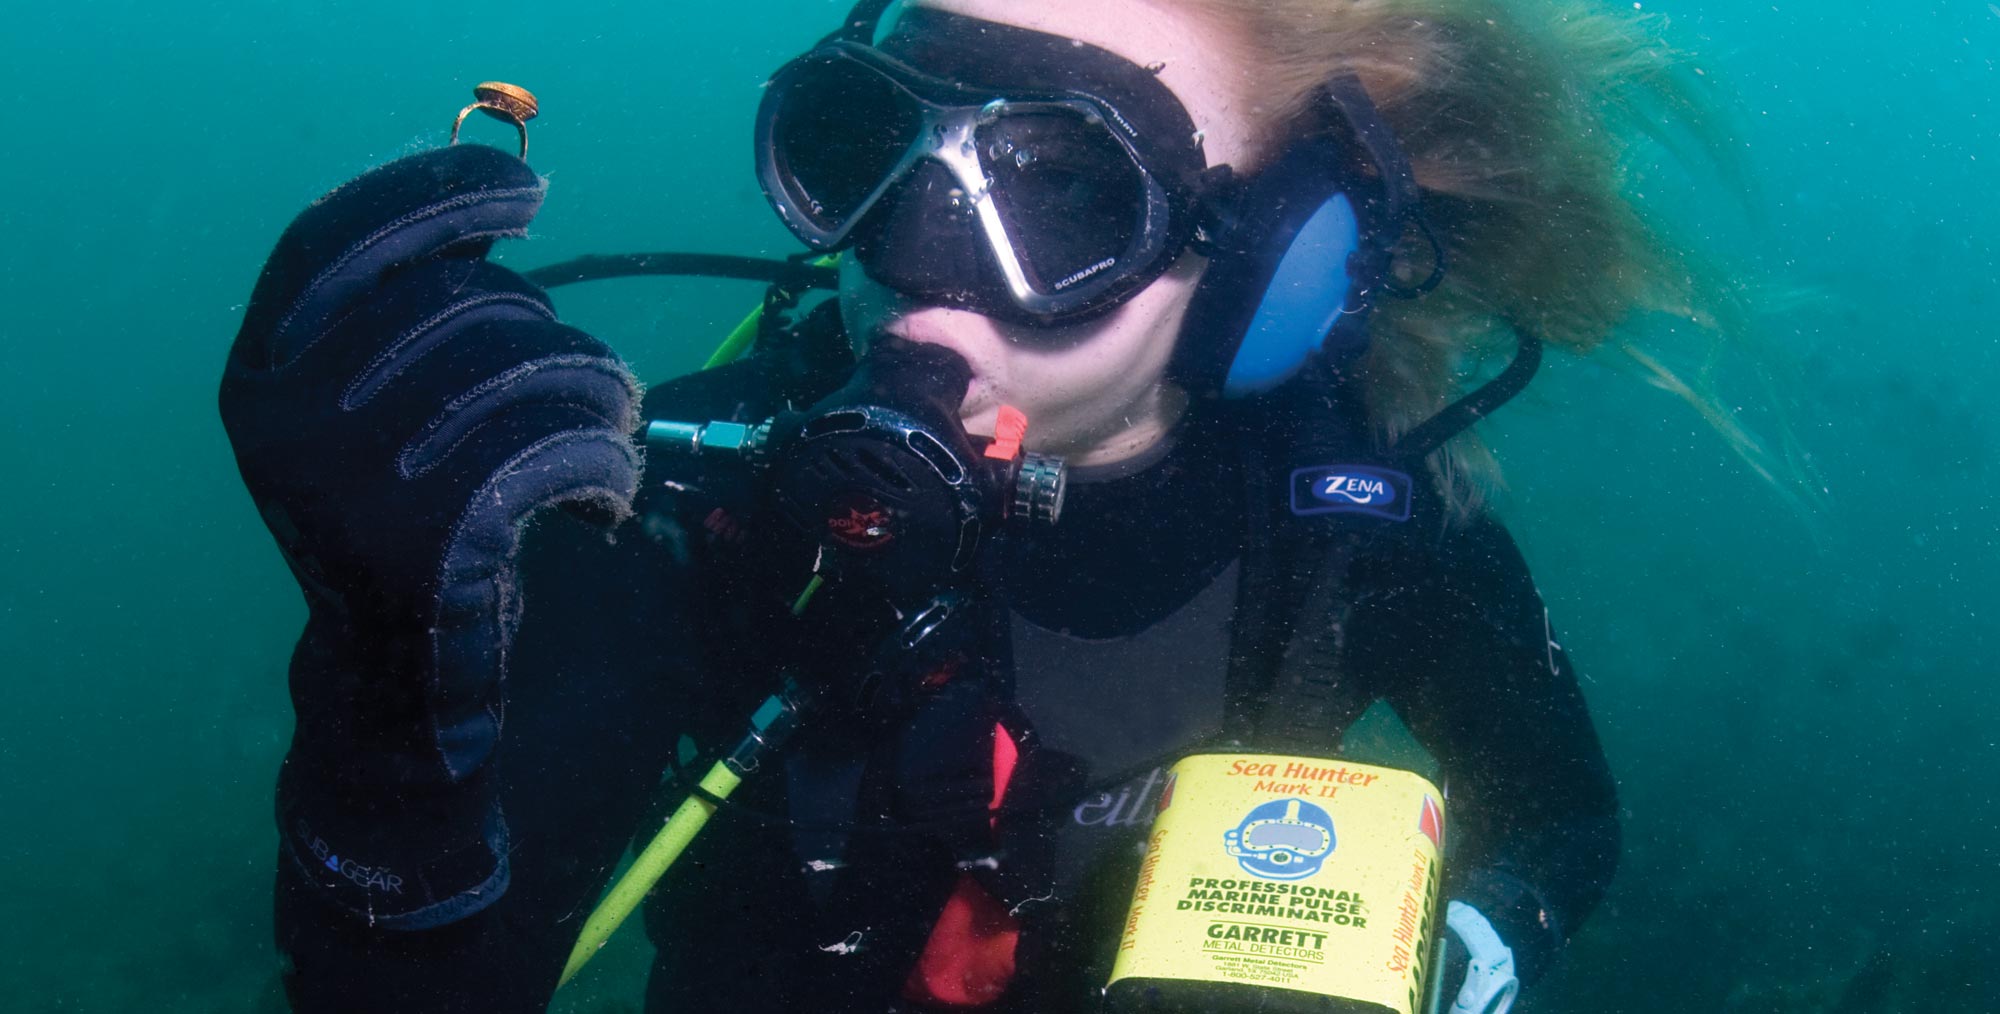 Sea Hunter Mark Underwater  Beach Metal Detector